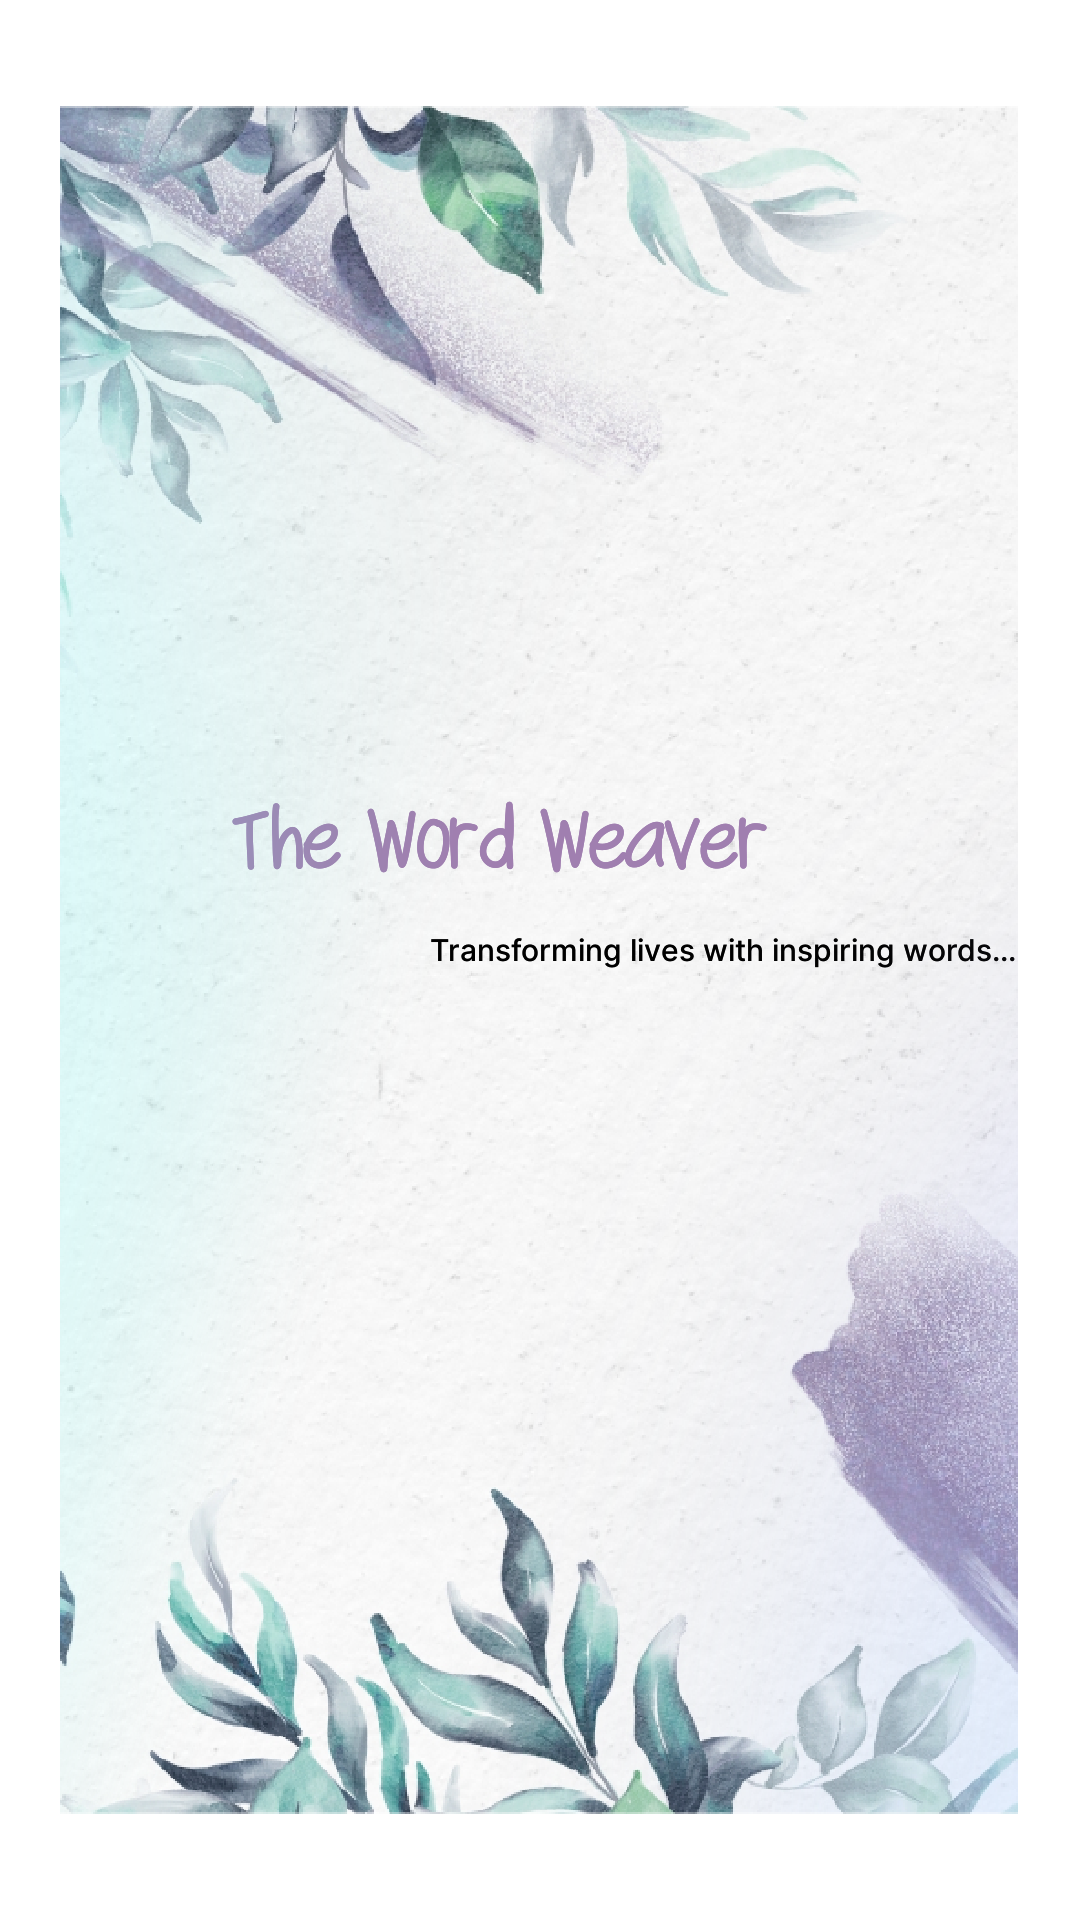 Word weaver